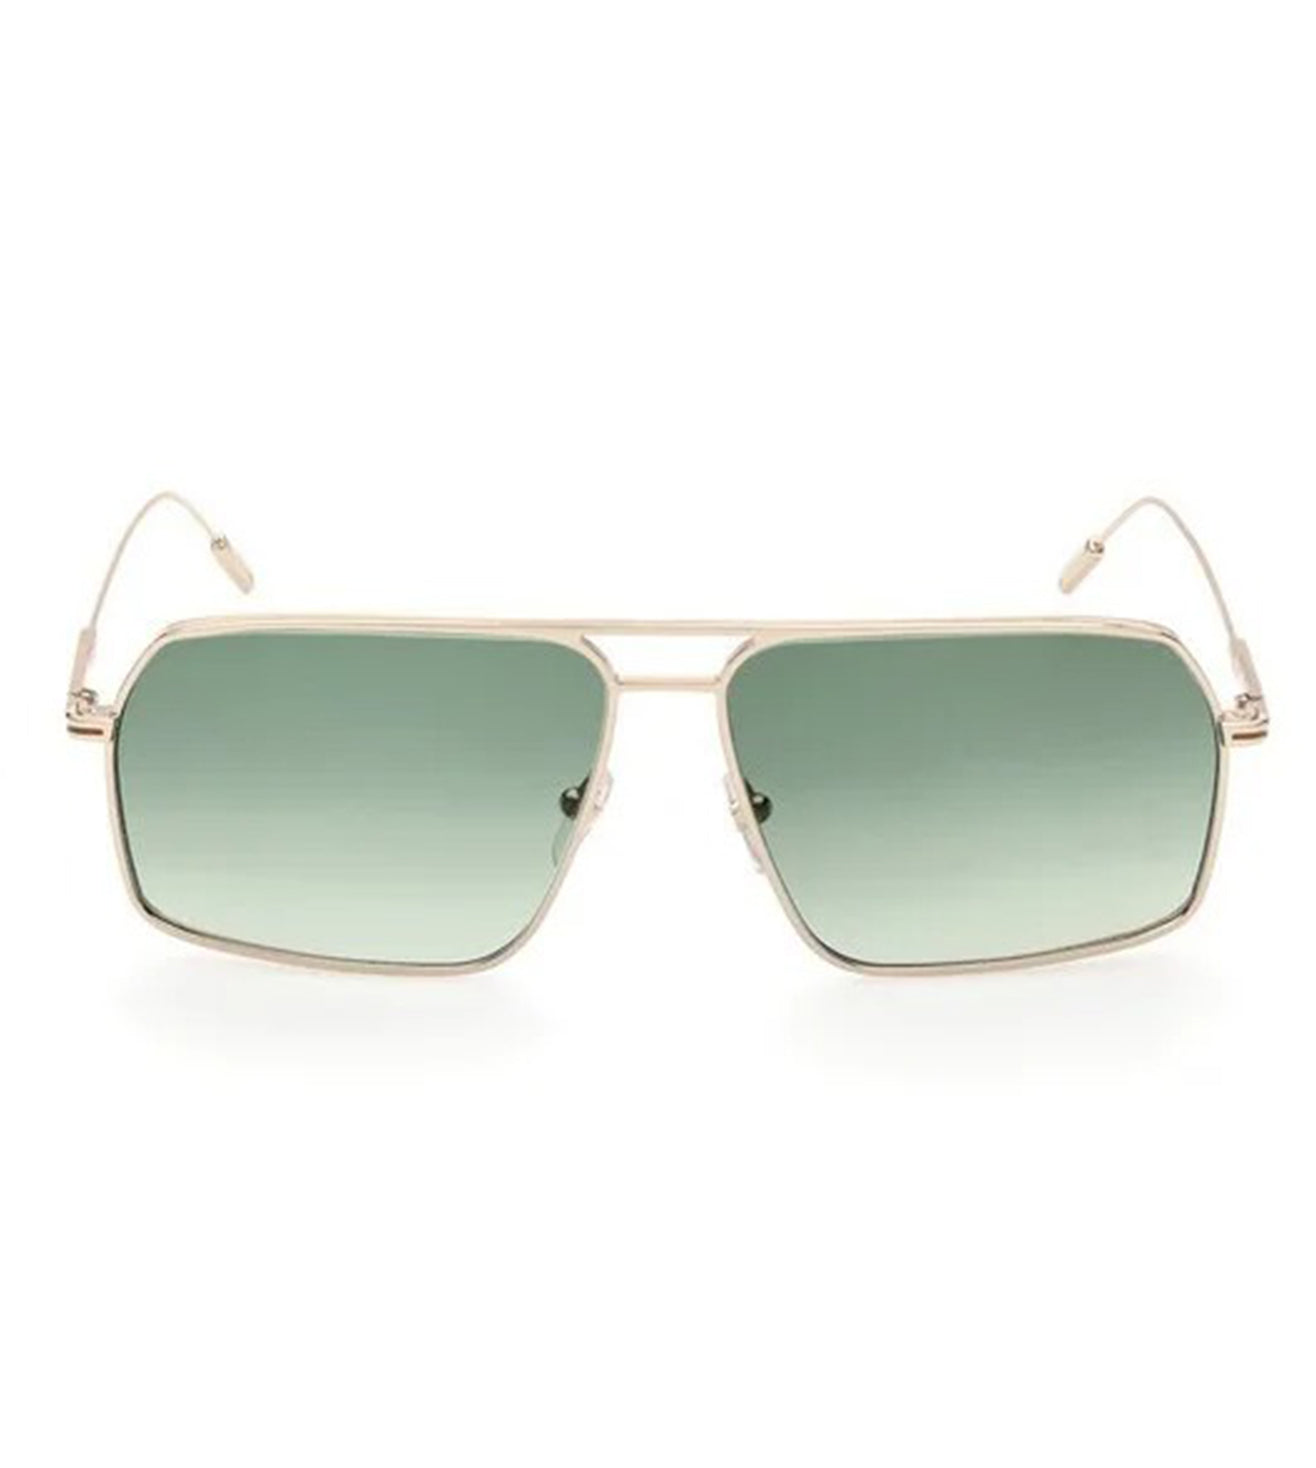 Zegna Men's Gradient Green Aviator Sunglasses